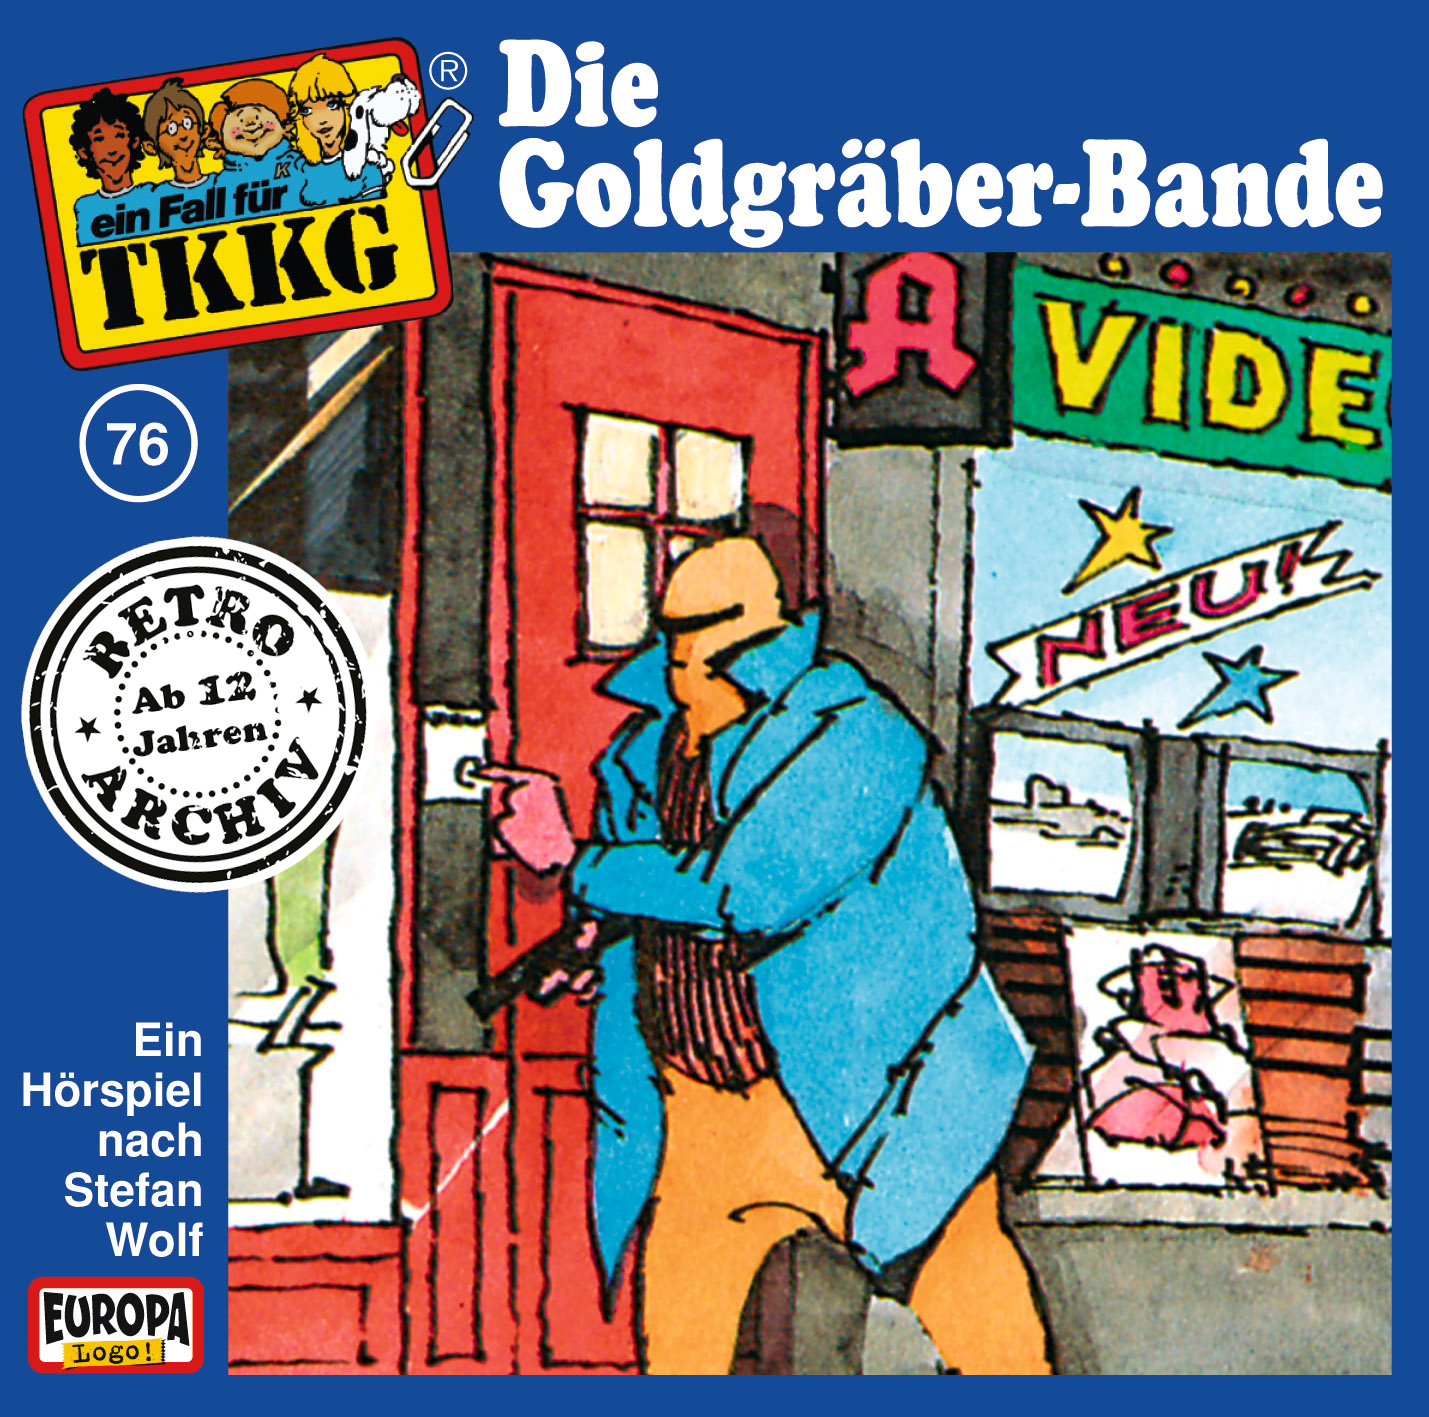 TKKG Retro-Archiv: Die Goldgräber-Bande